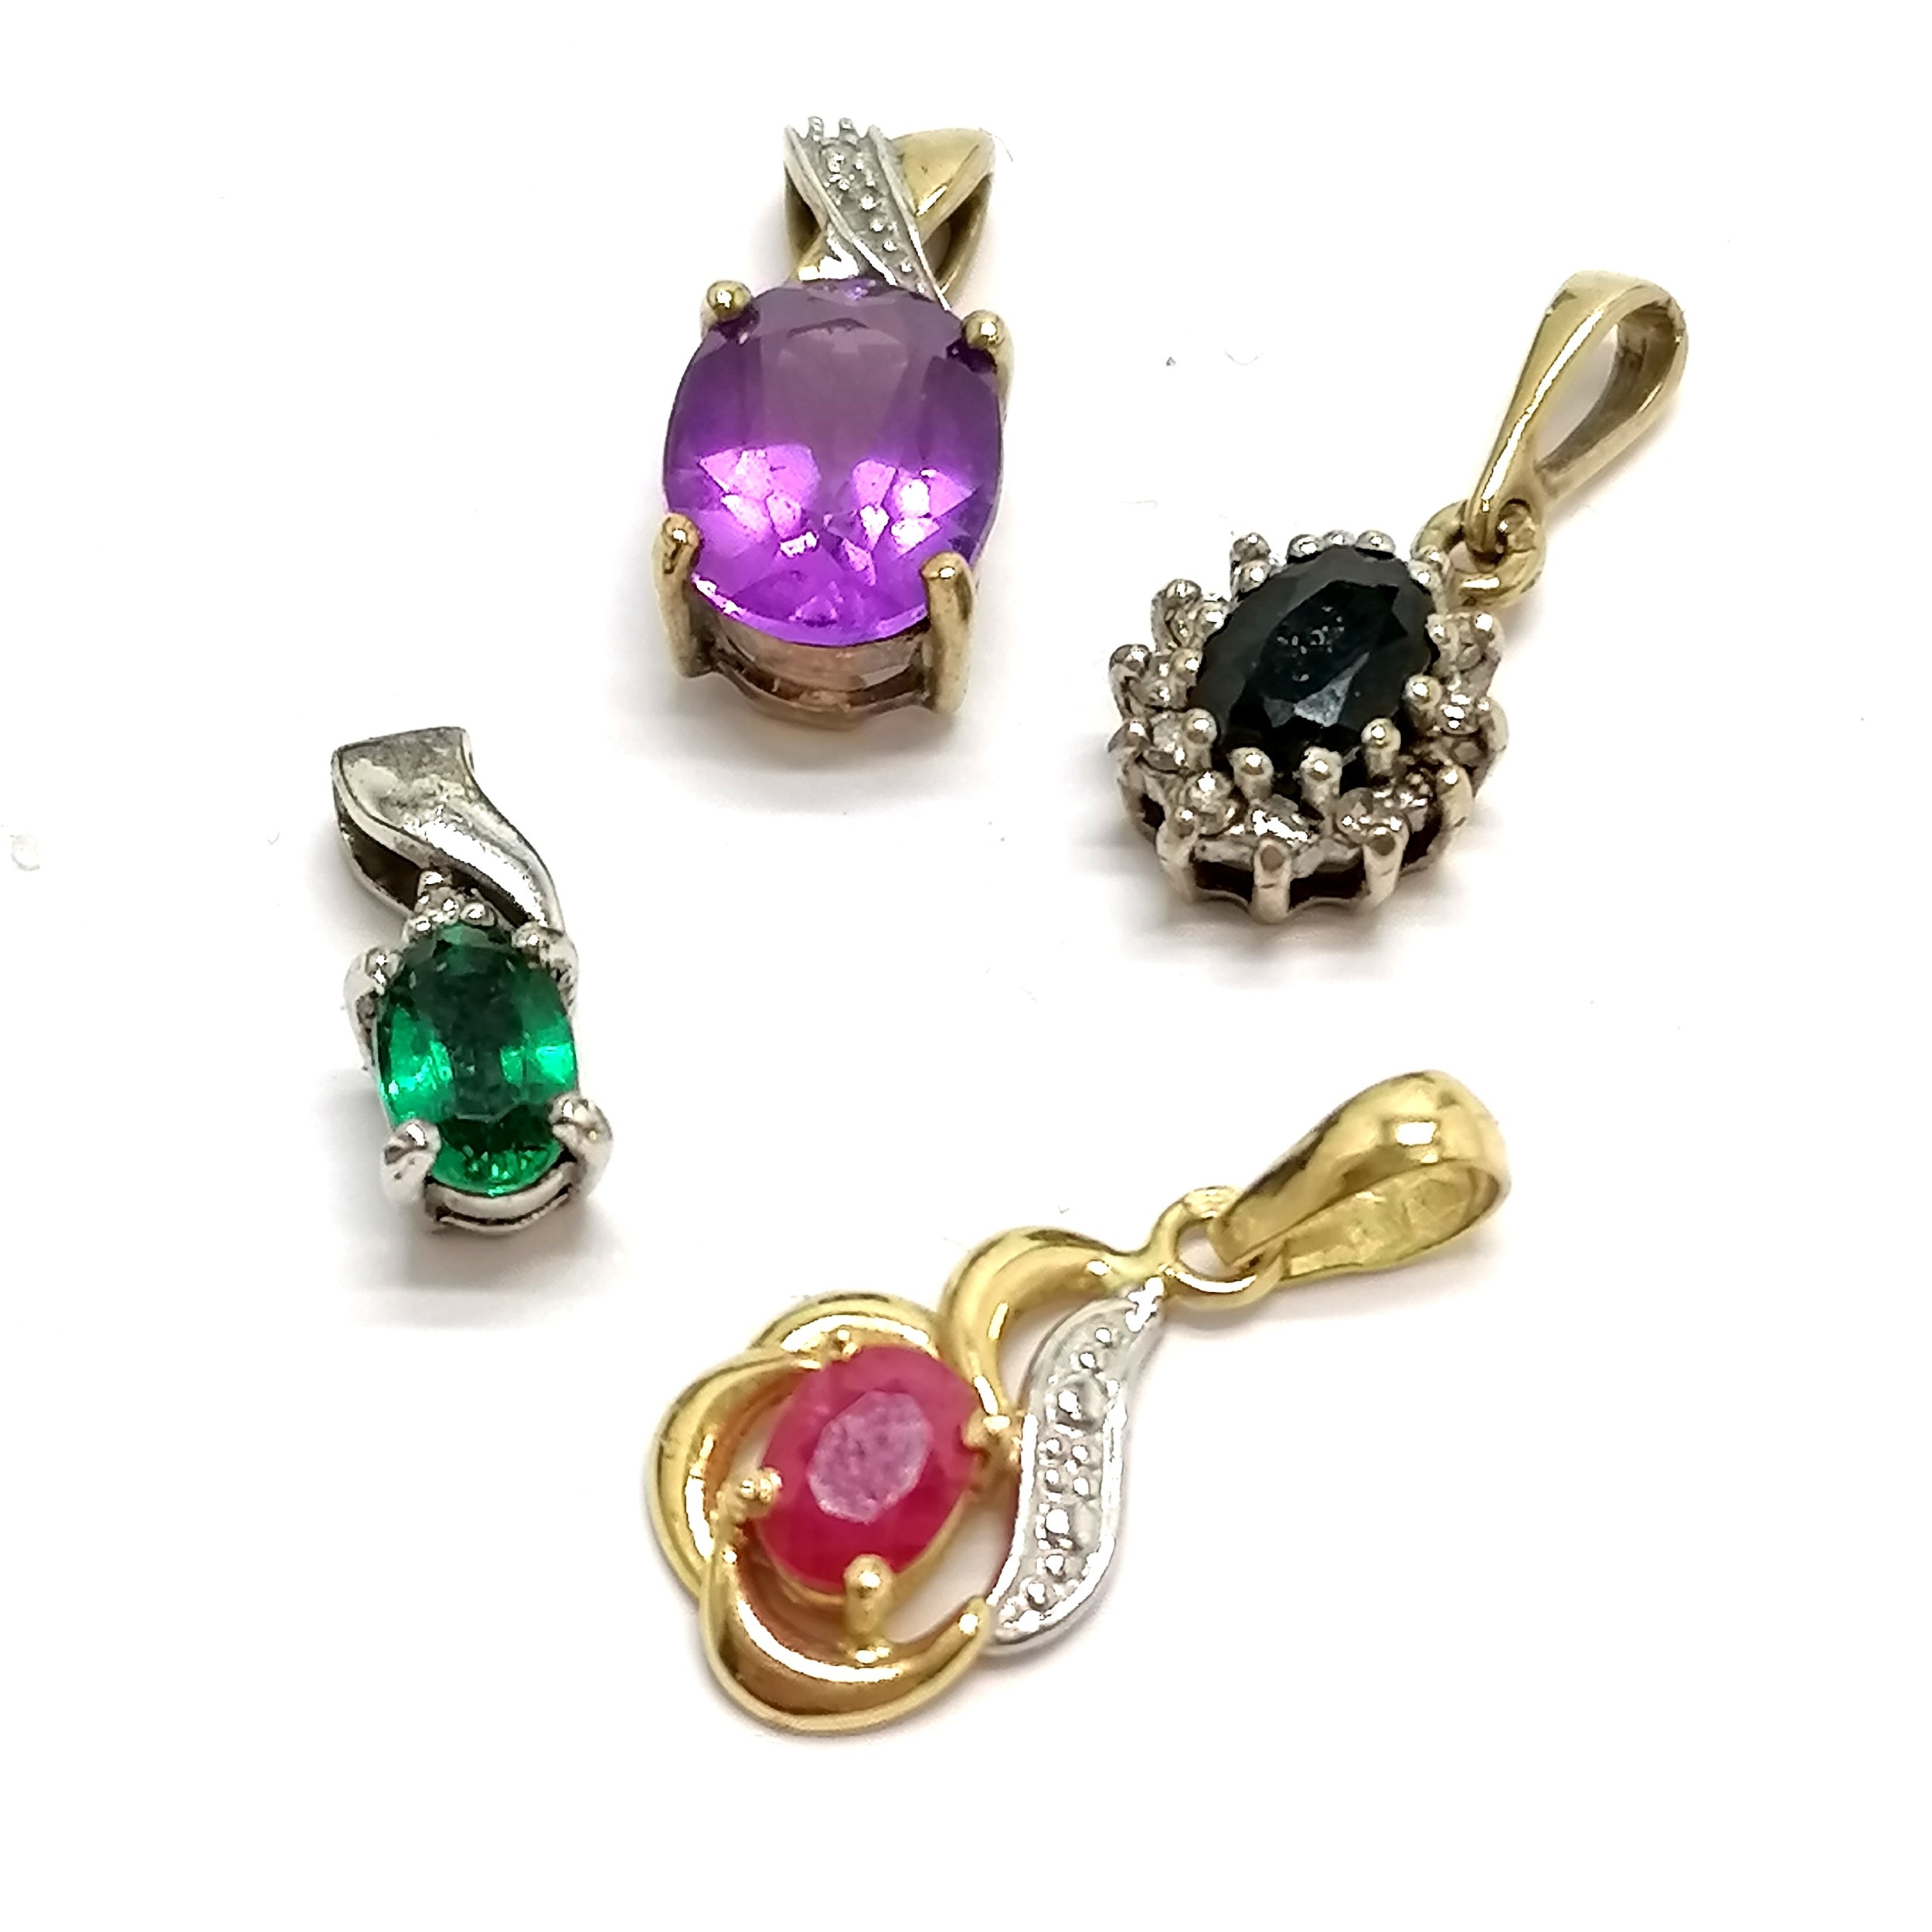 4 x gold stone set pendants - 18ct ruby & rest 9ct inc amethyst, sapphire / diamond cluster etc -